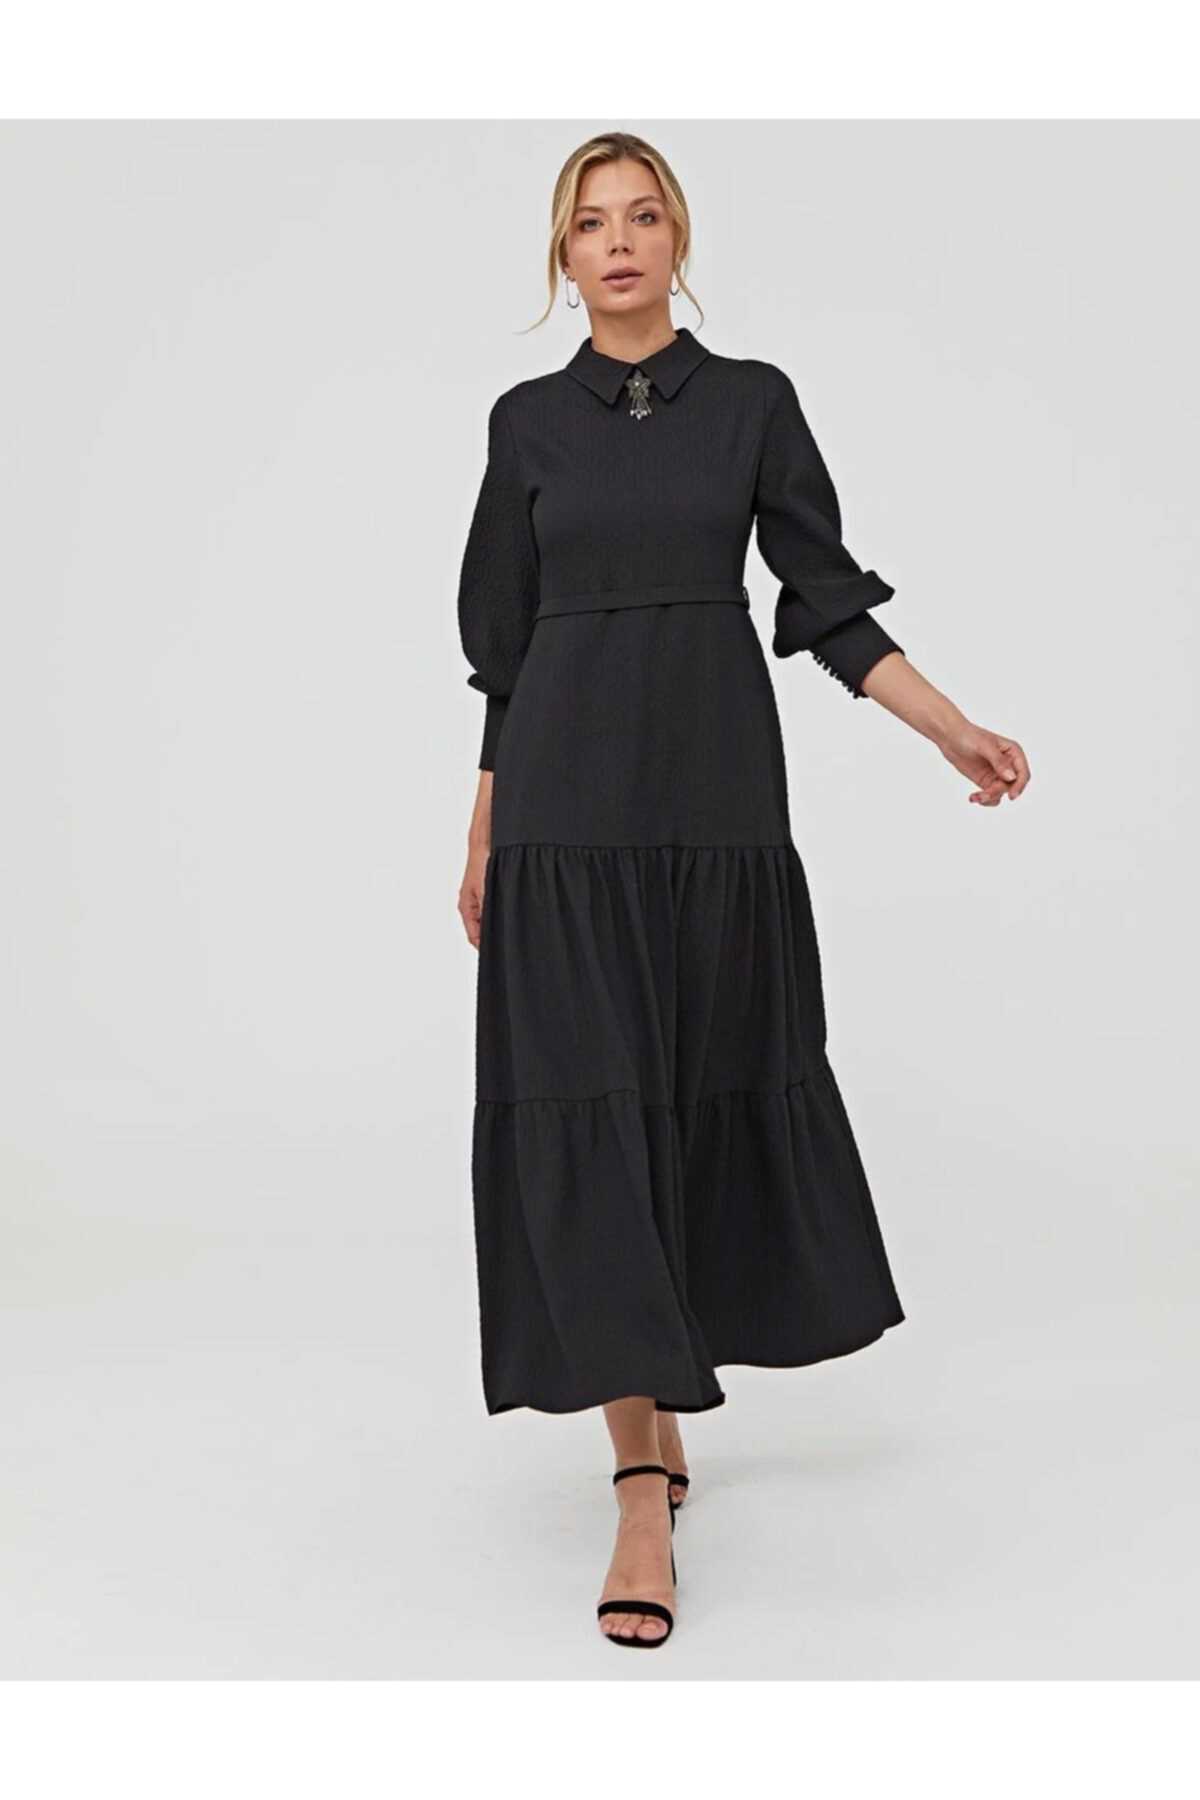 خرید اینترنتی پیراهن اسلامی زنانه شیک برند Kayra رنگ مشکی کد ty147803236